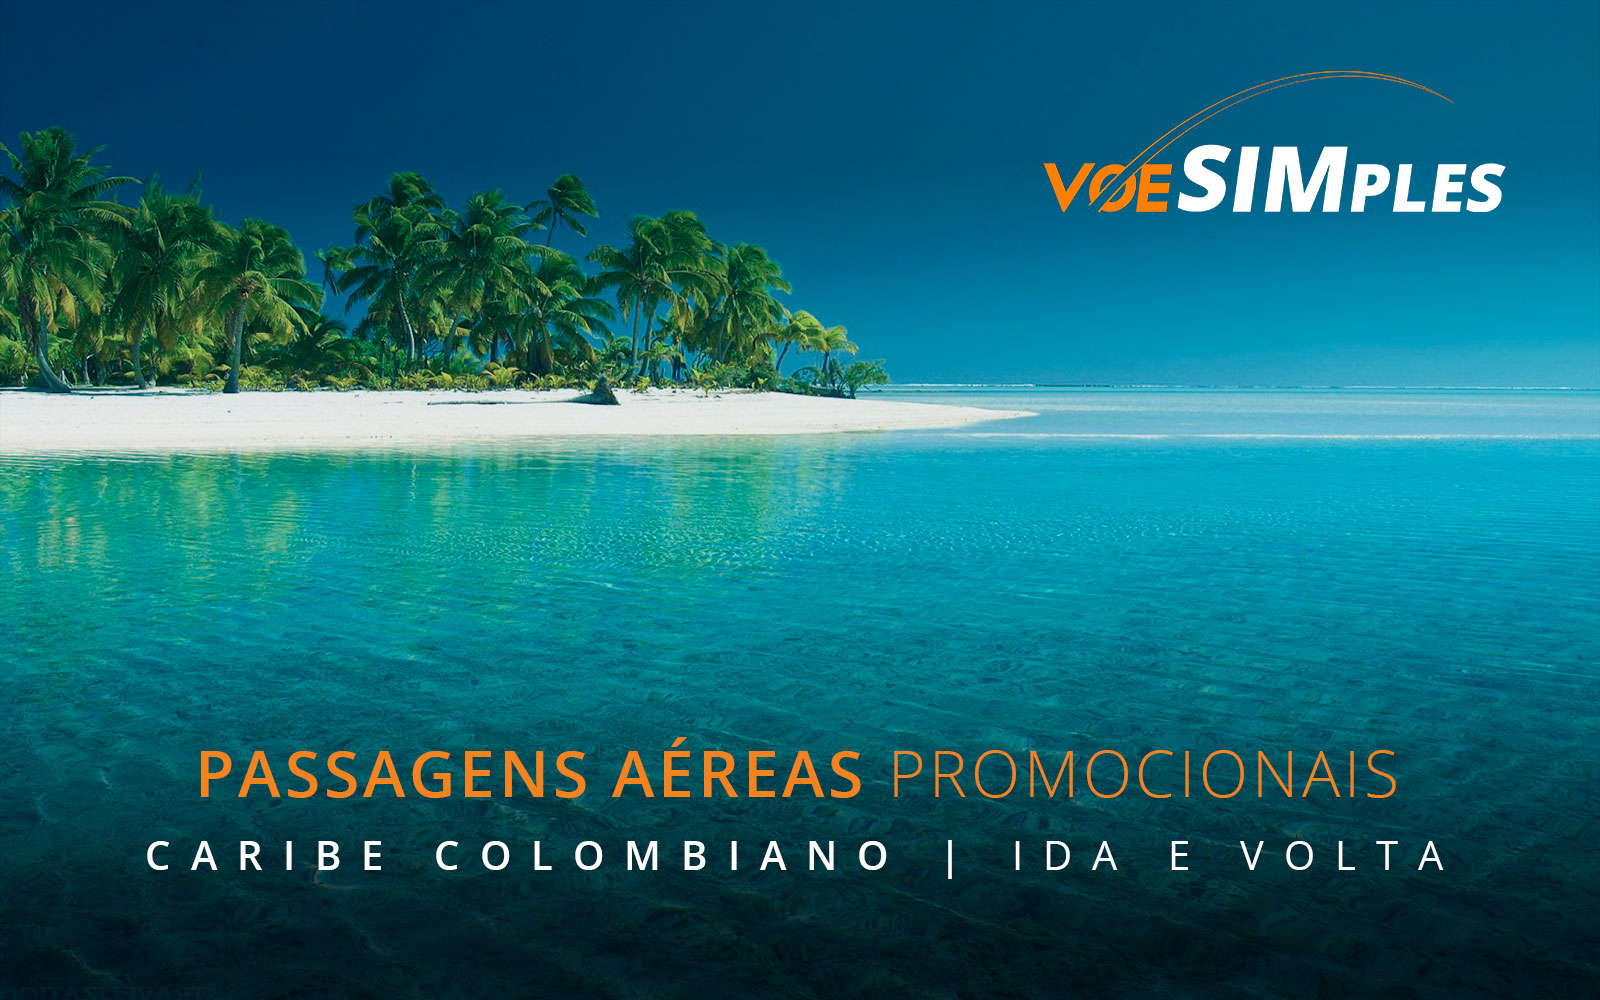 passagens-aereas-promocionais-colombia-caribe-voe-simples-passagens-aereas-baratas-promocao-caribe-colombiano